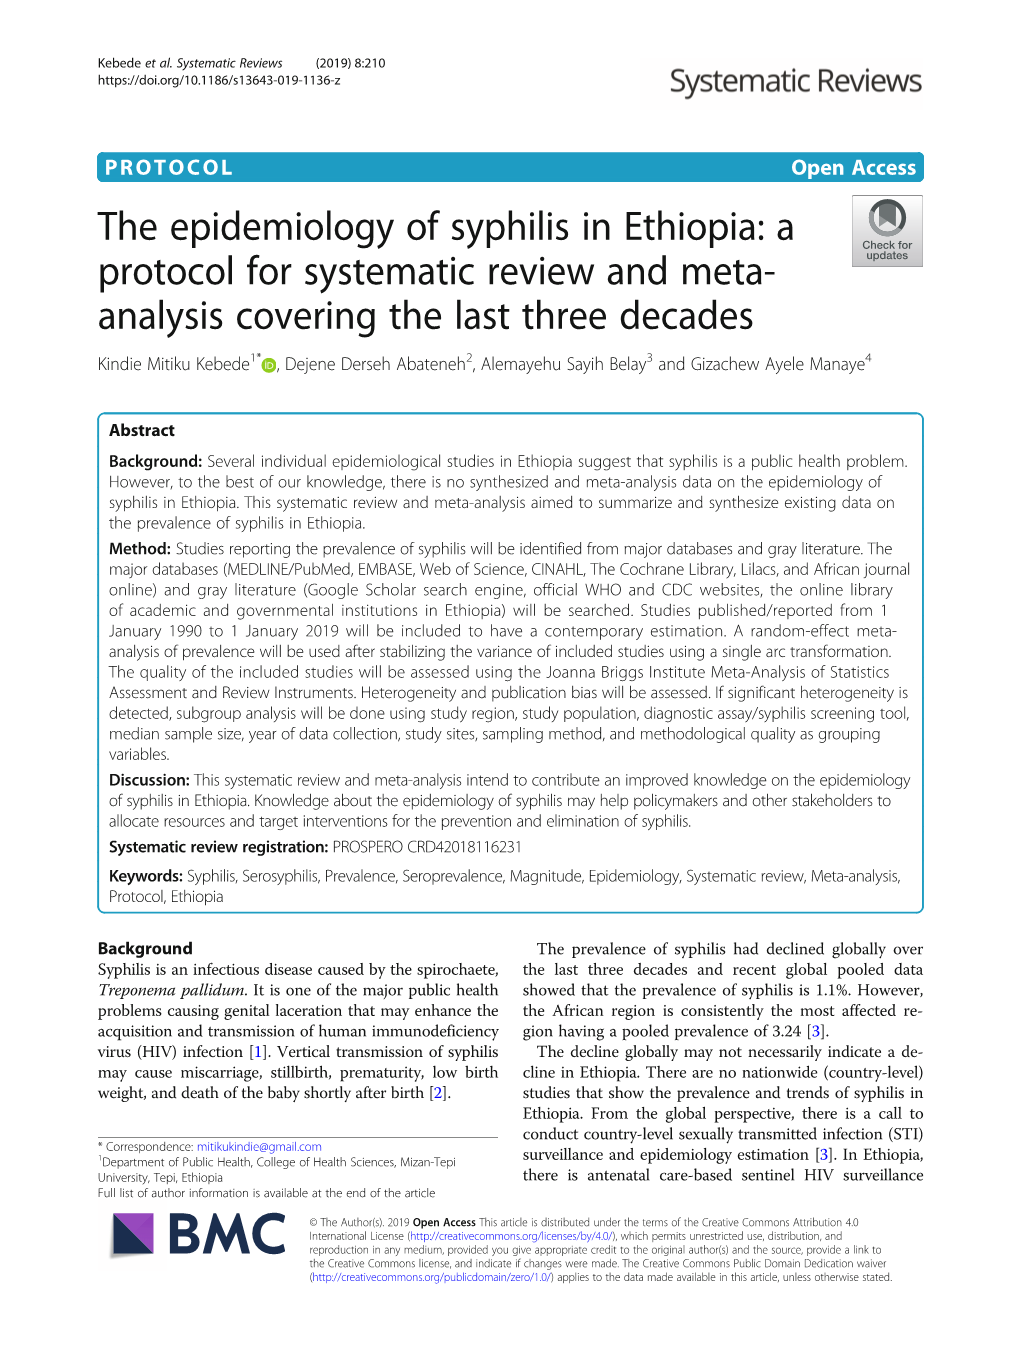 The Epidemiology of Syphilis in Ethiopia